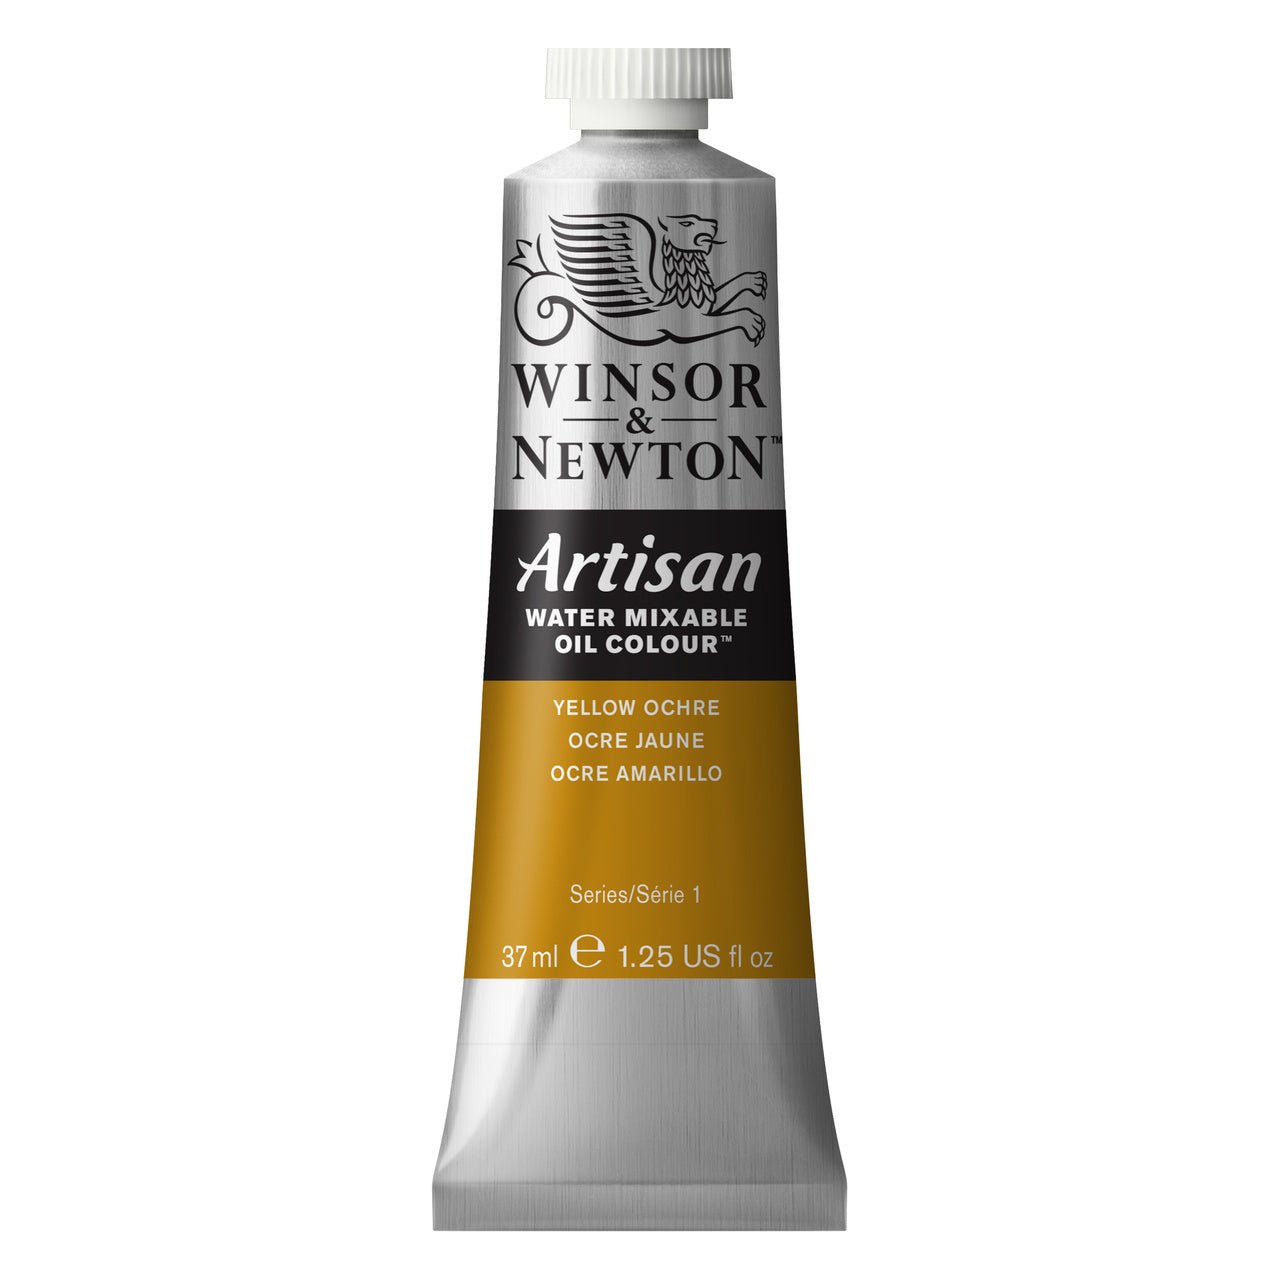 Winsor & Newton Artisan Water Mixable Oil 37ml - Yellow Ochre - merriartist.com